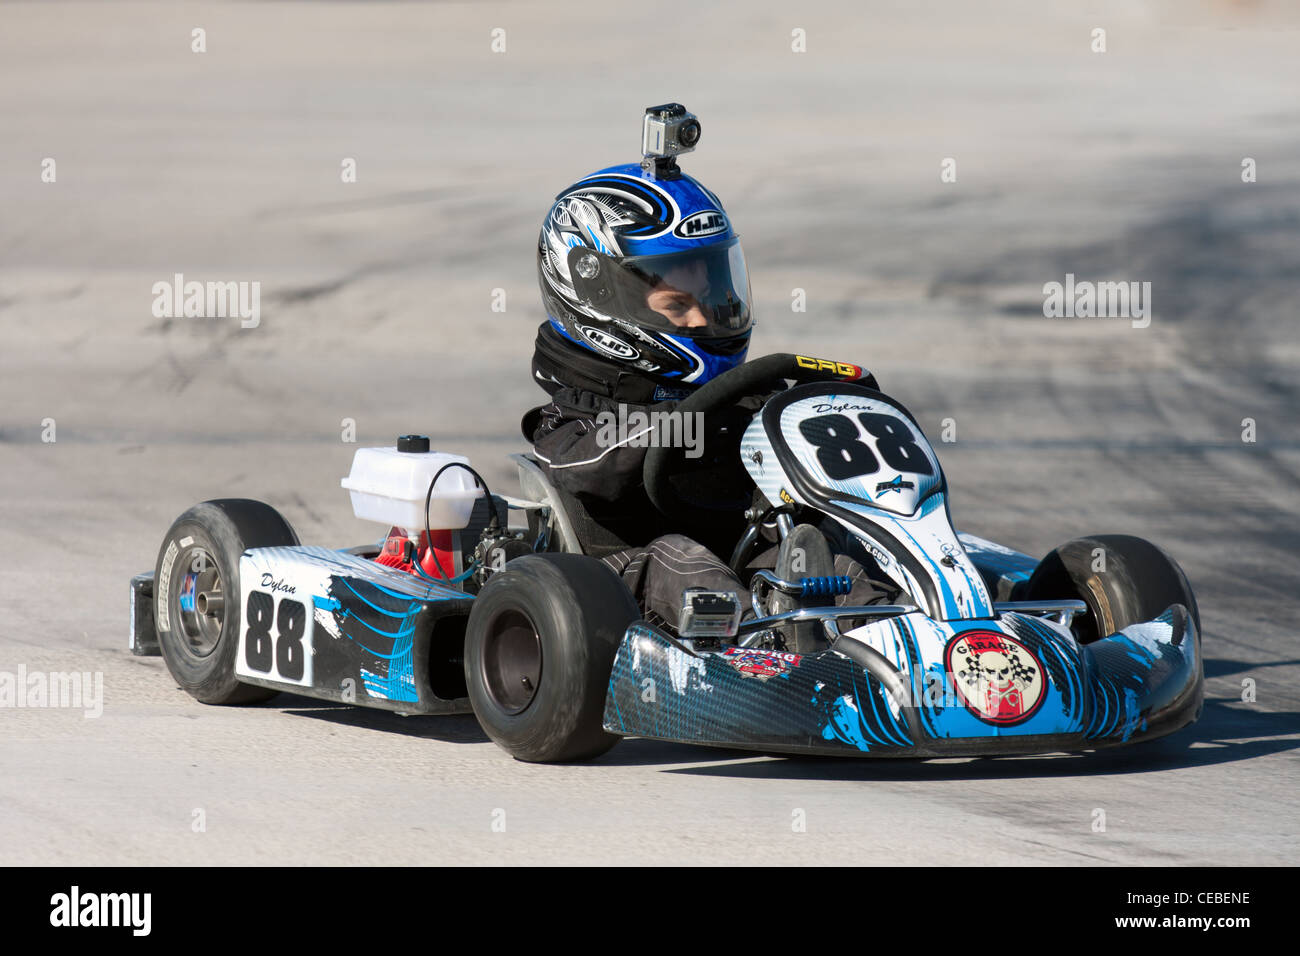 LAS VEGAS NEVADA - February 04:Junior Go Kart race at the Las Vegas Speedway on May 12, 2008 in Las Vegas Nevada. Stock Photo